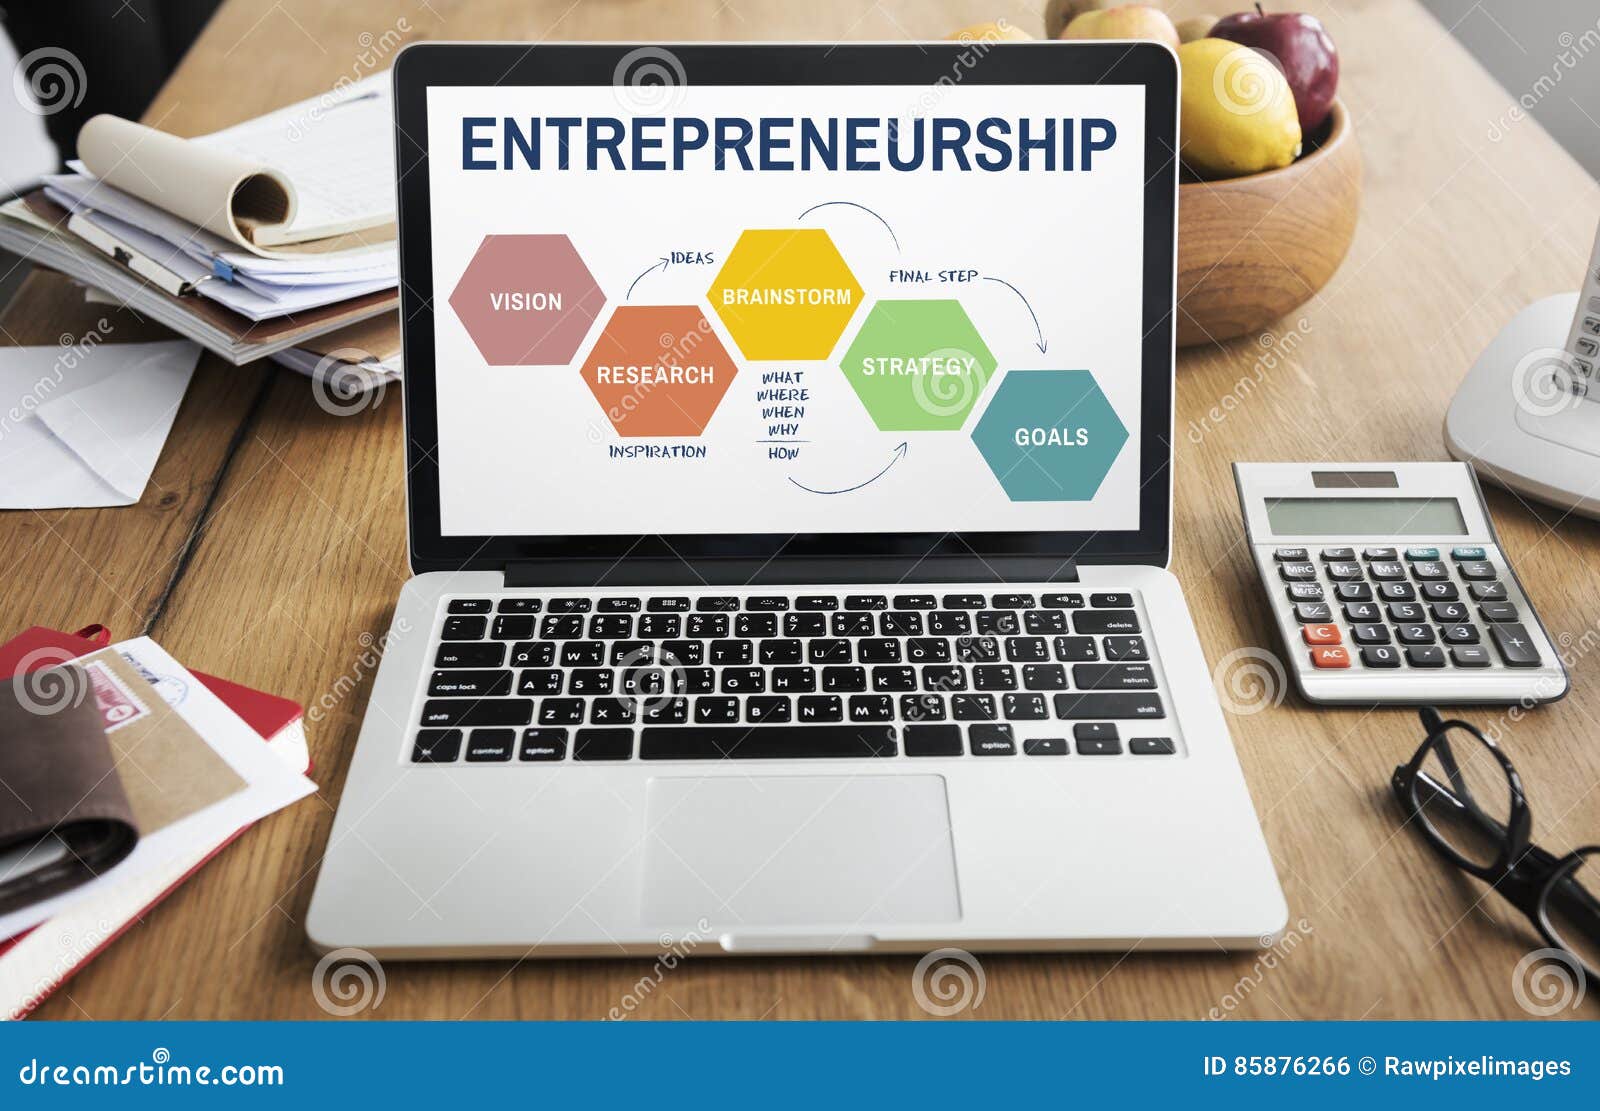 entrepreneurship strategy business plan brainstorming graphic c